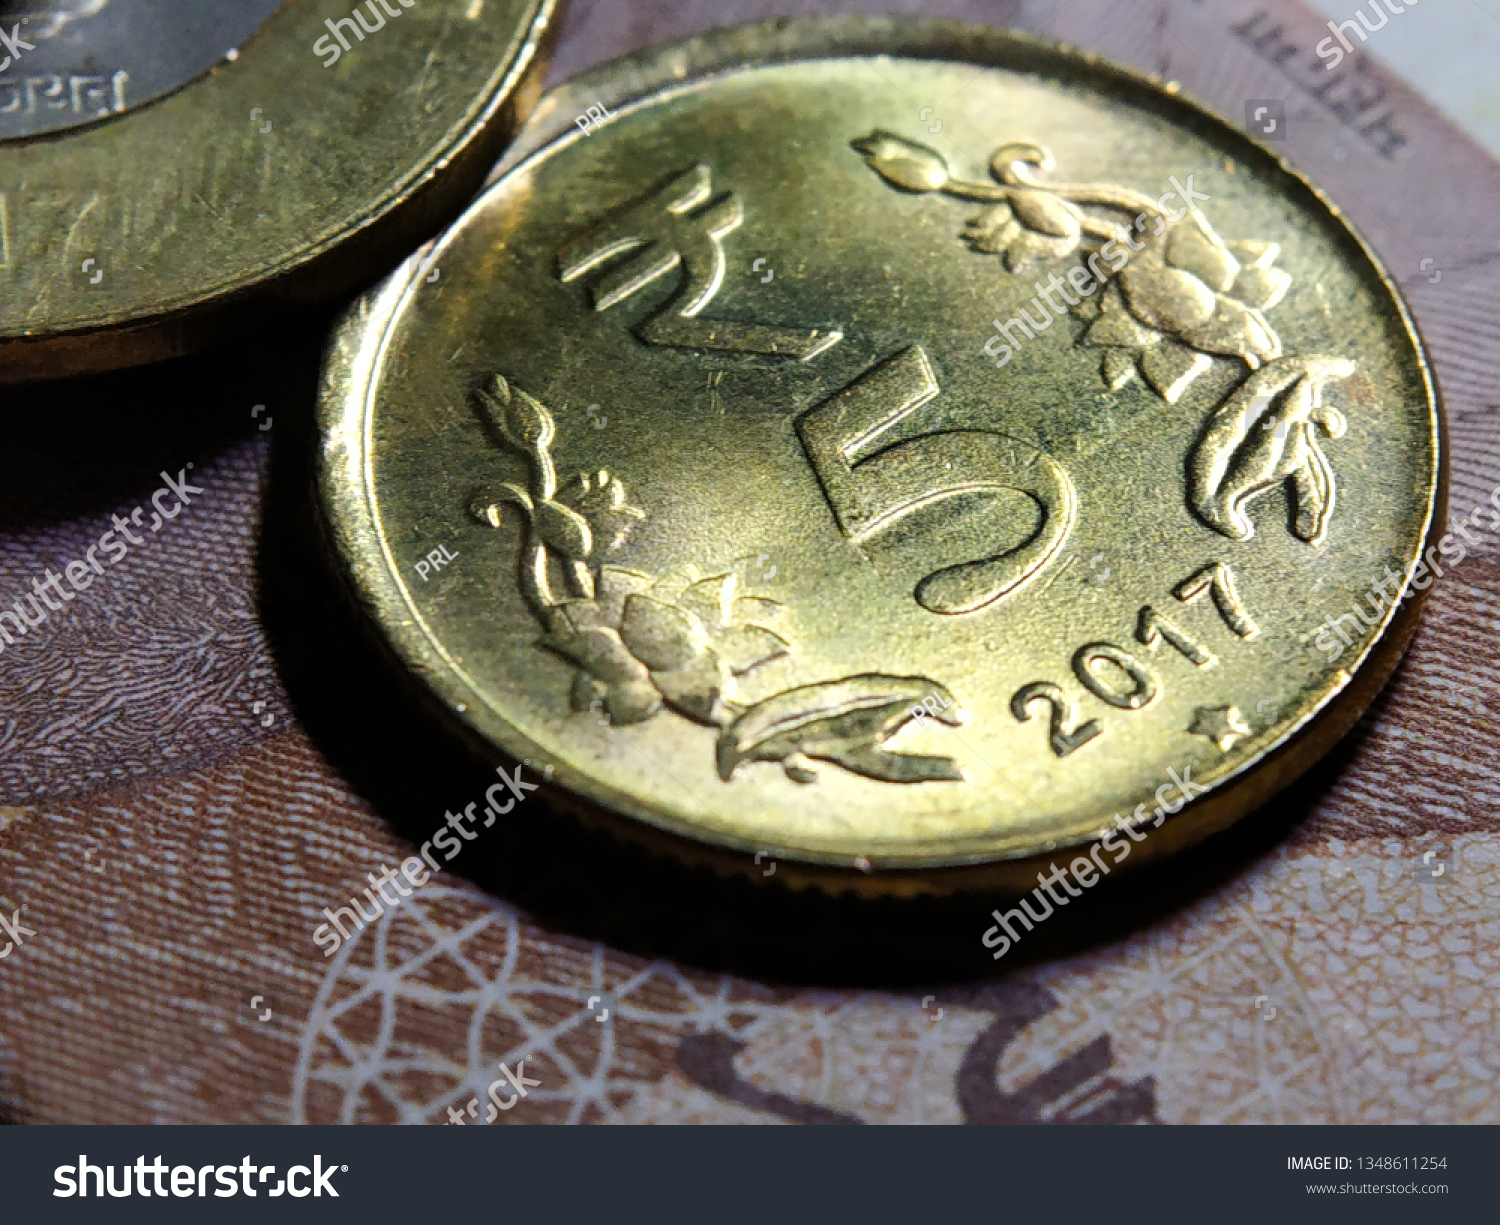 Indian five rupee coin close up shot #1348611254